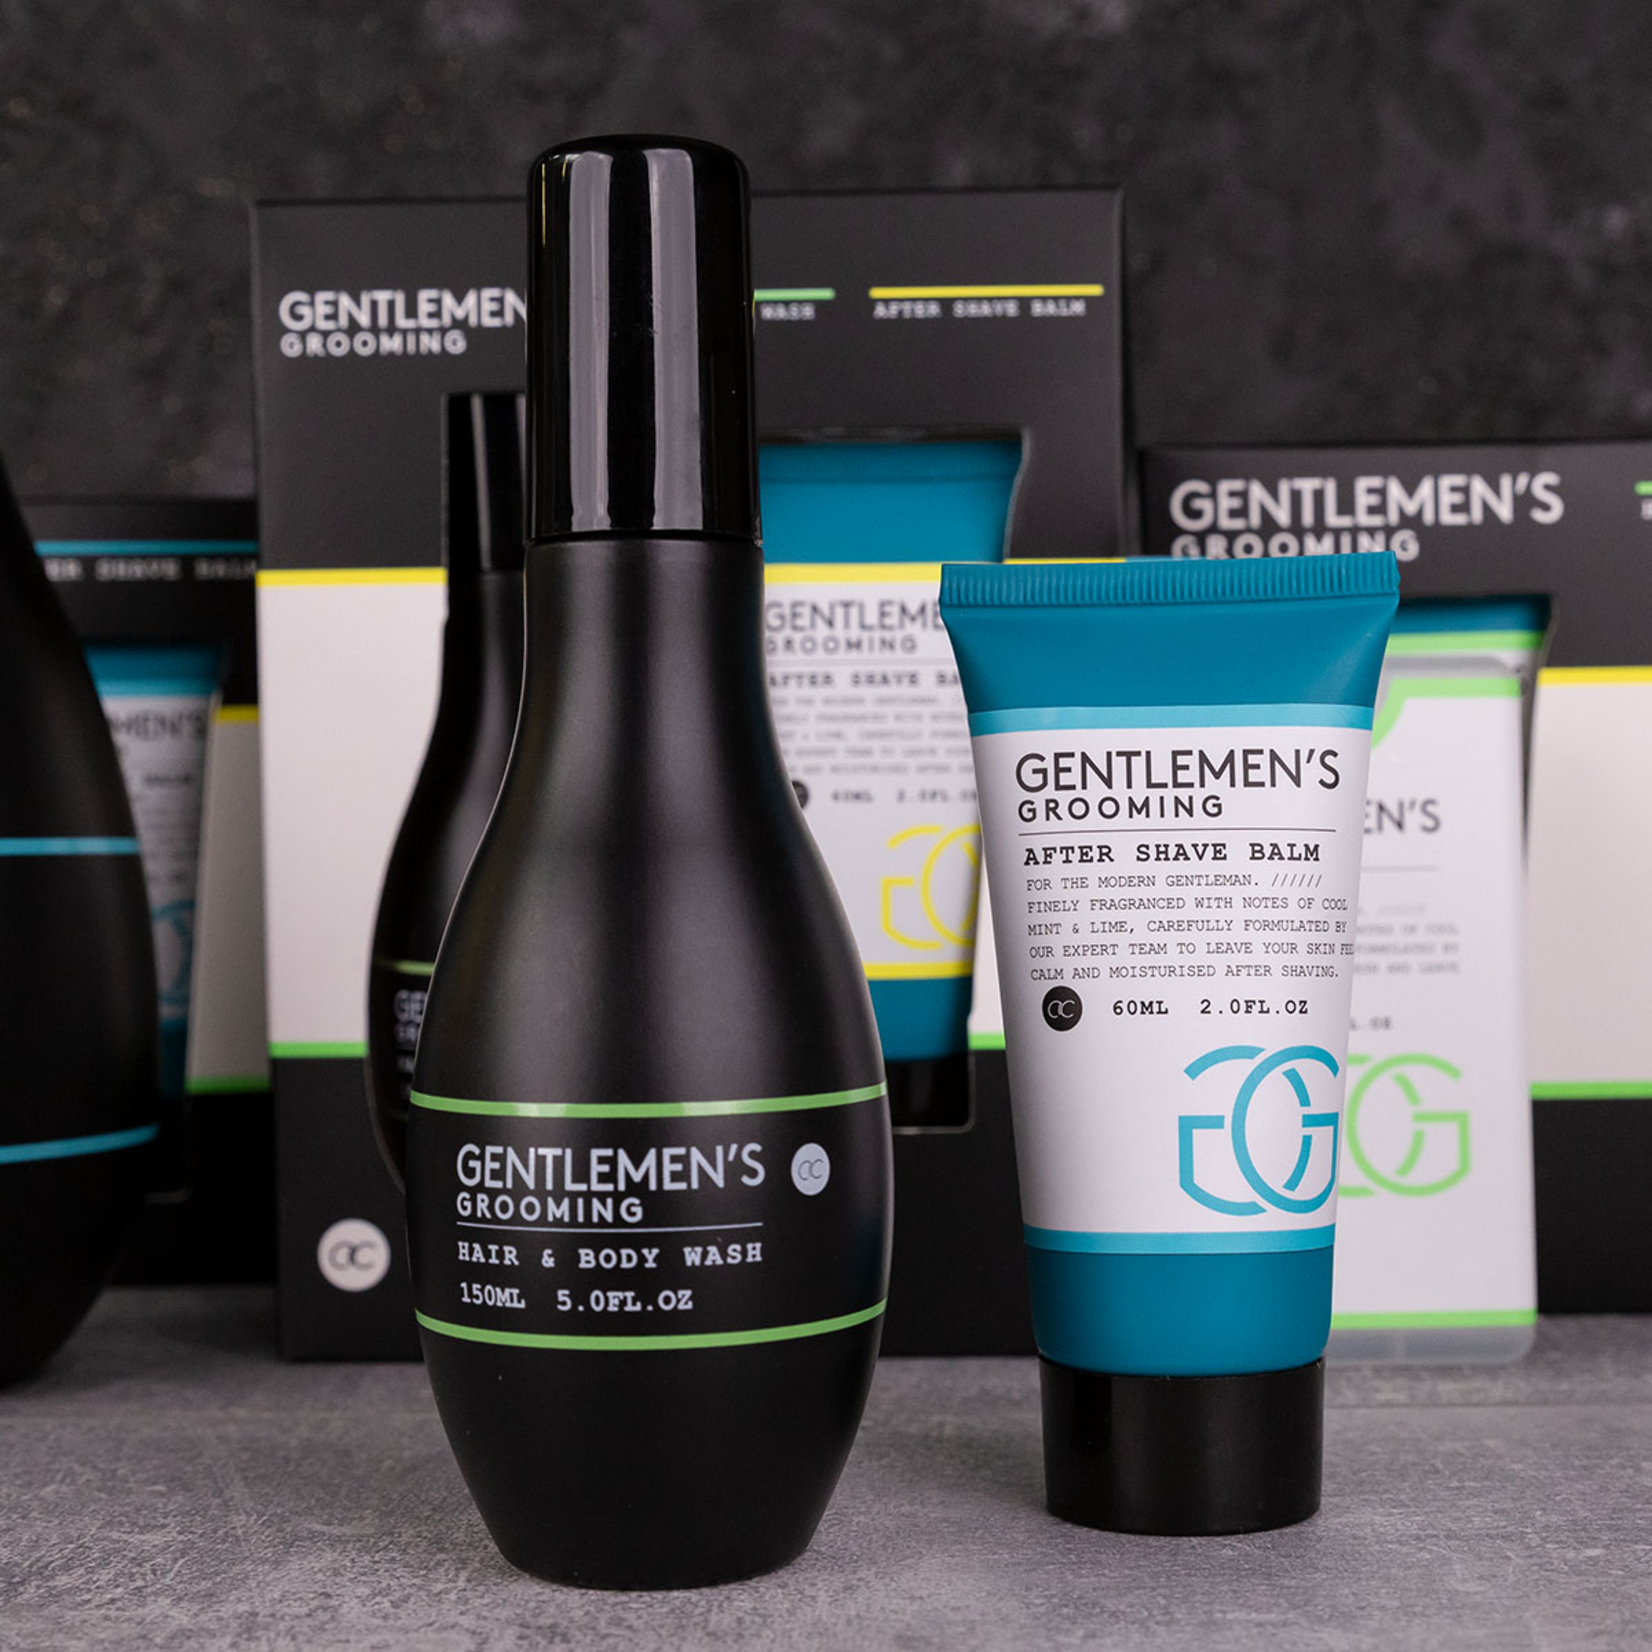 Gentlemen's Grooming Mannen cadeau set body - Gentlemen's Grooming - Cool Mint & Lime - Mooi cadeau voor hem